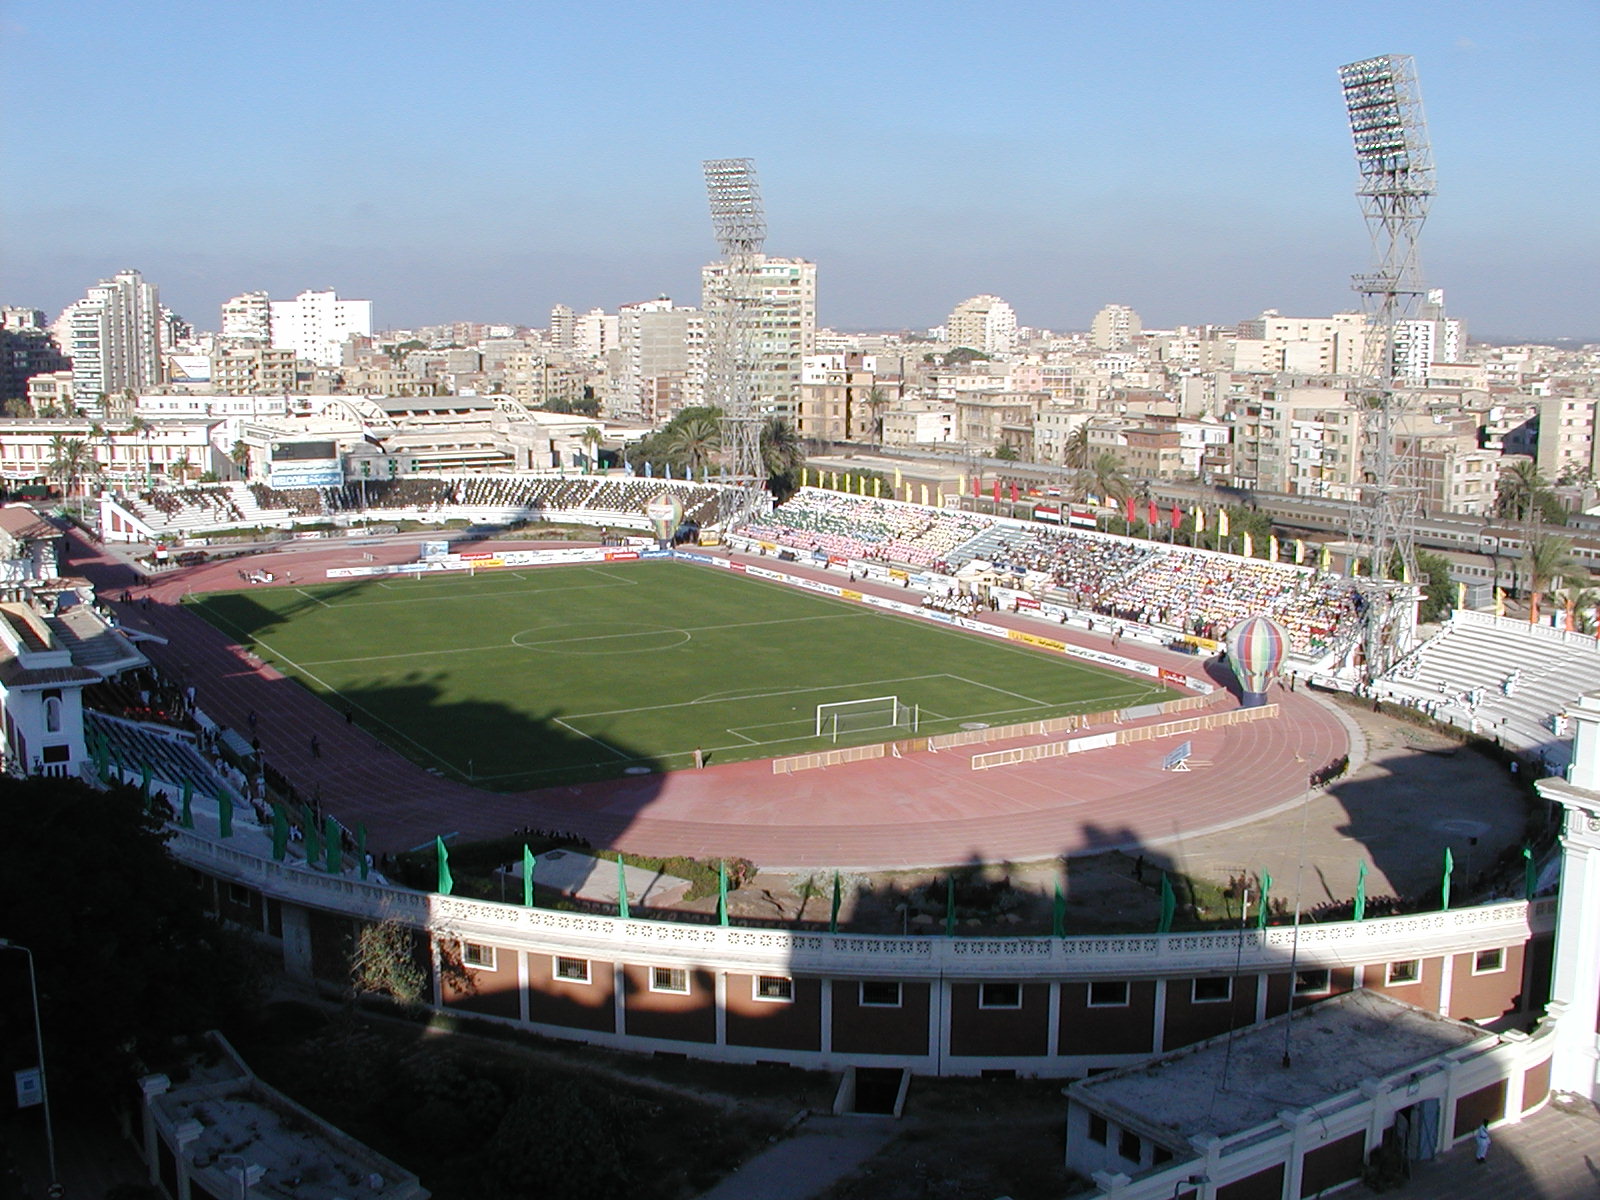 Egypt's famous soccer stadiums' attire